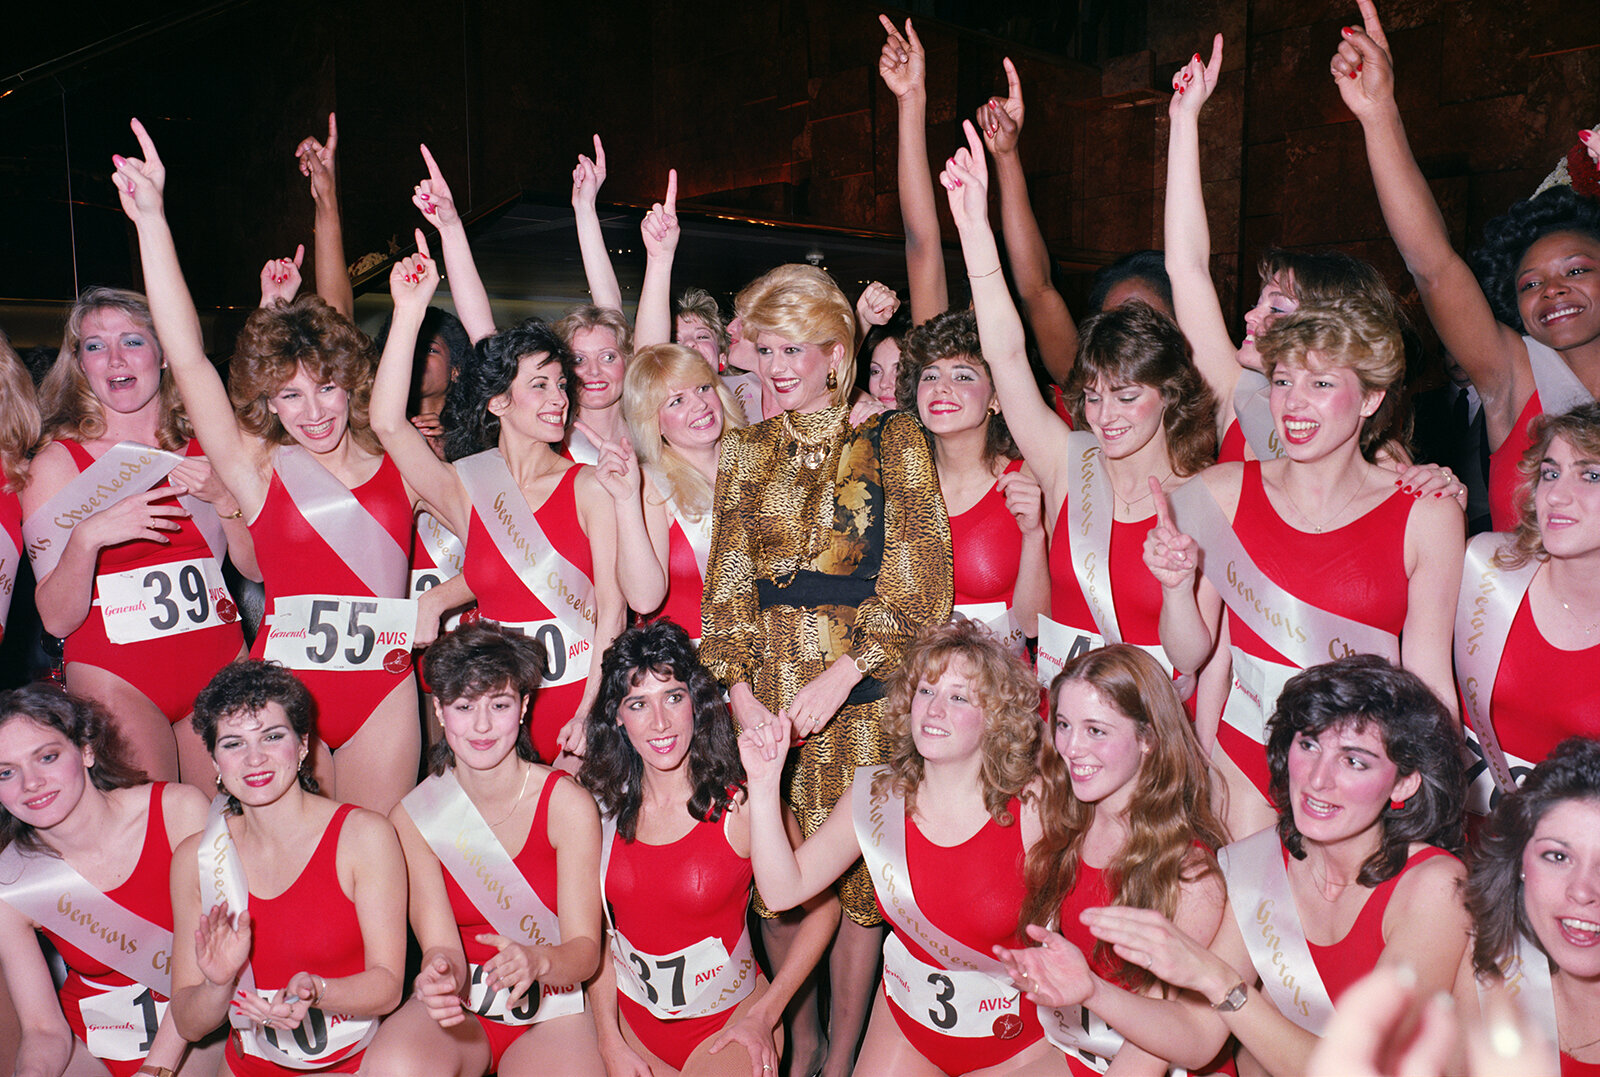  Ivana Trump and New Jersey Generals Cheerleaders, Trump Tower, New York City 1984 (Fortune) 